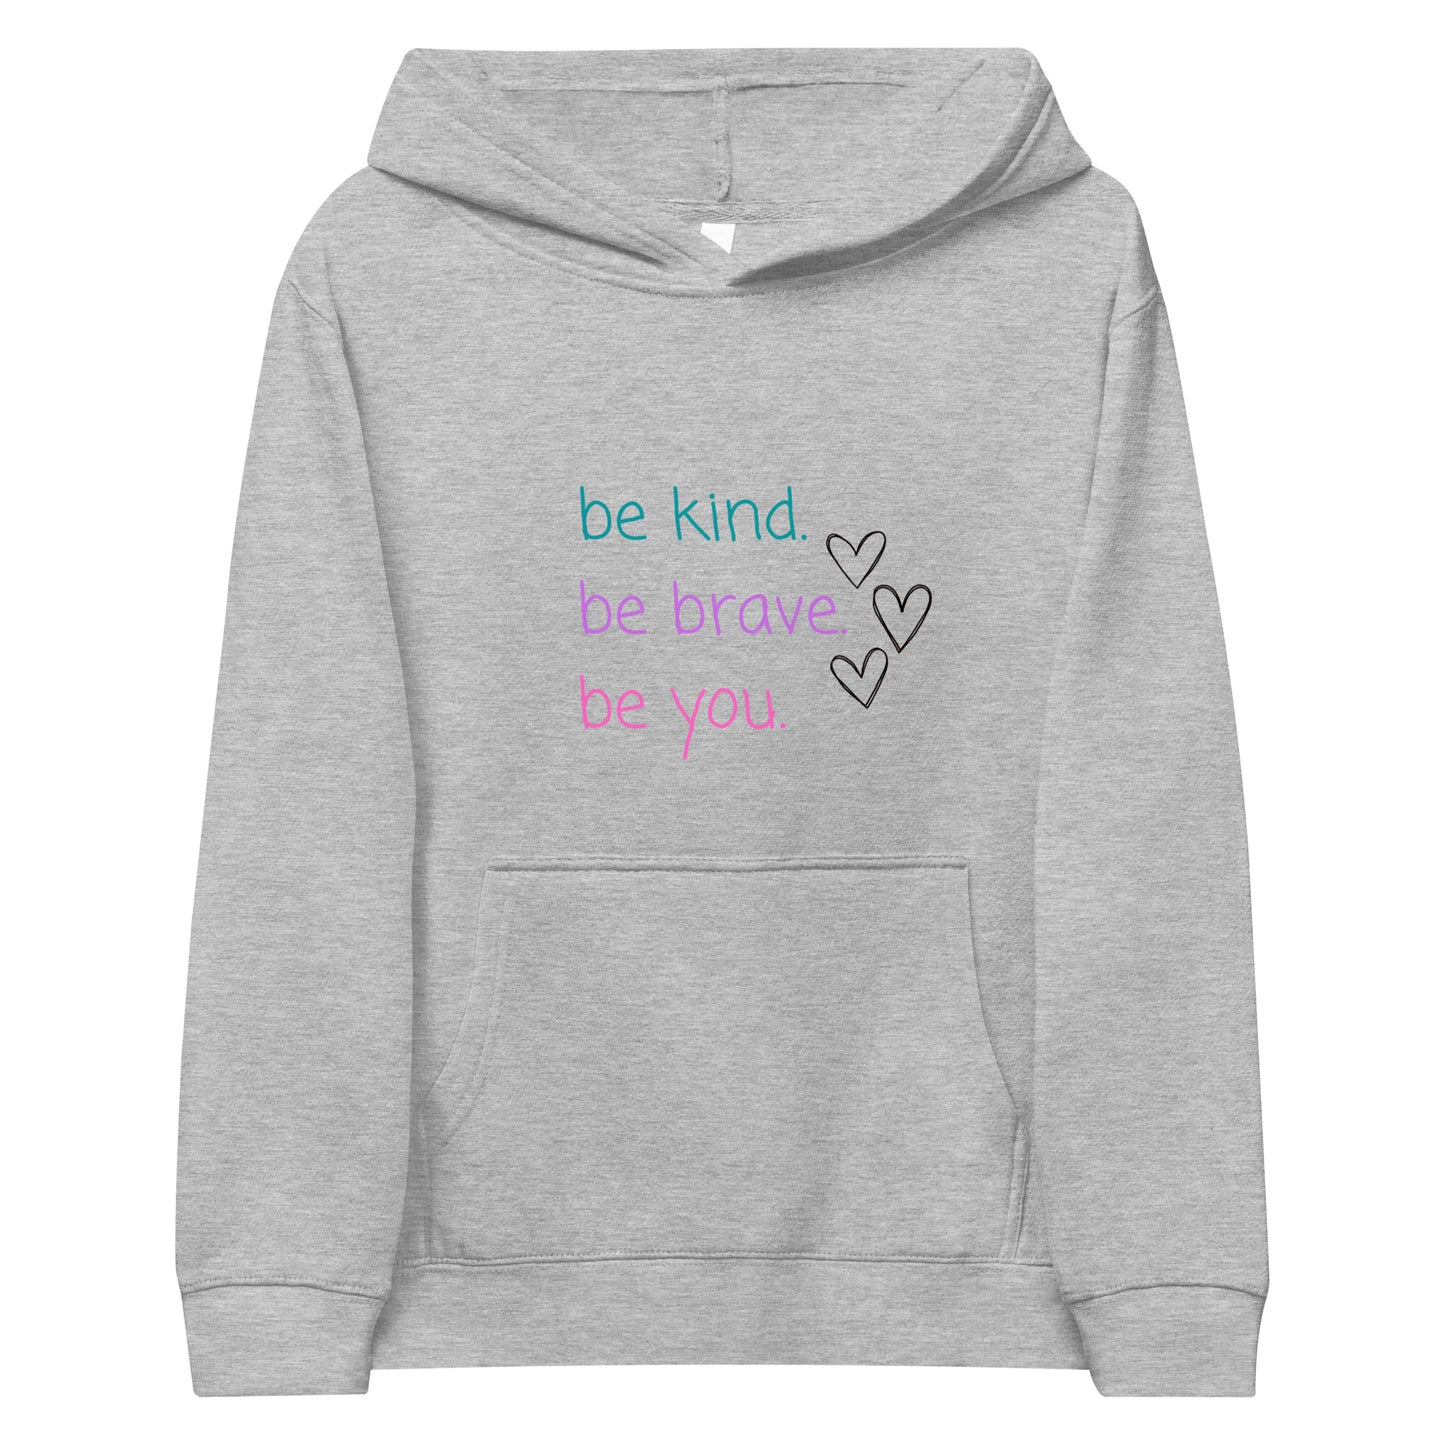 Kids fleece hoodie - be kind. be brave. be you. (hearts)